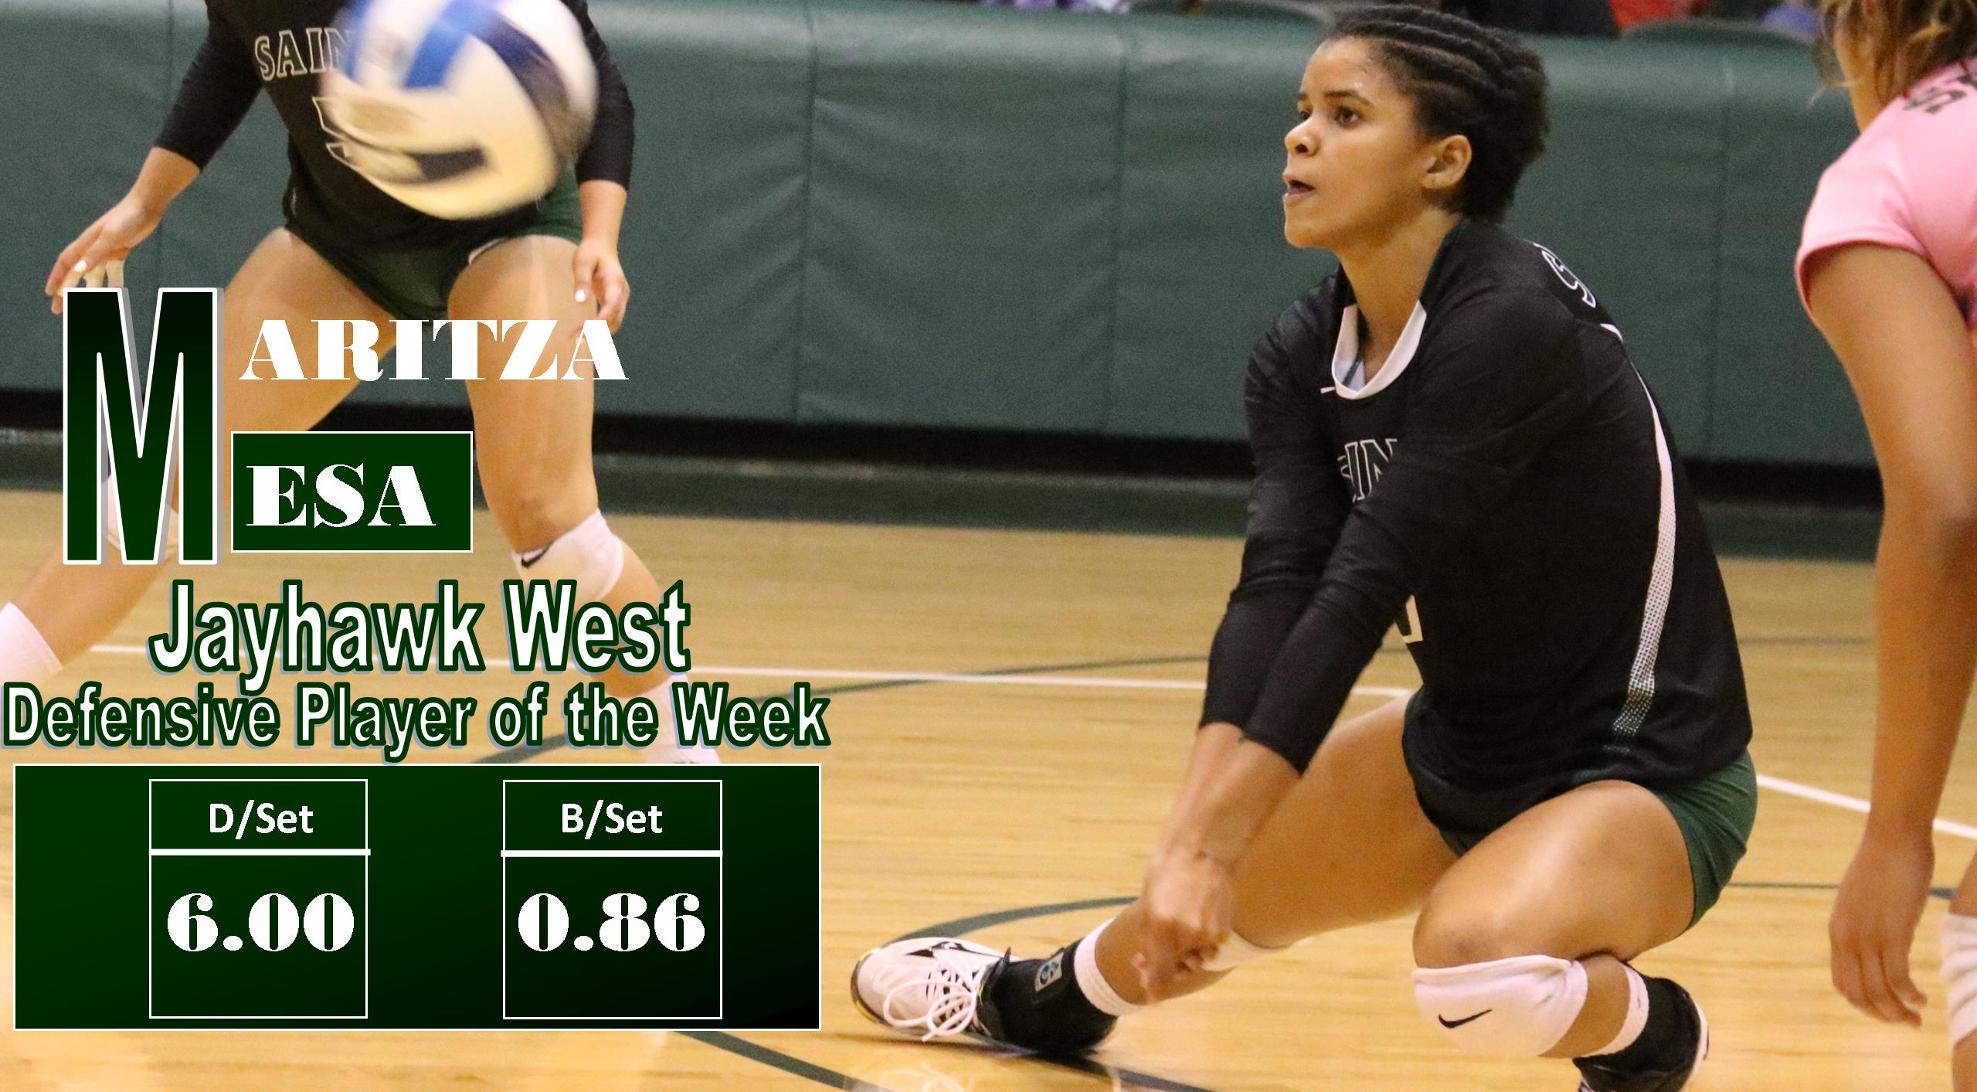 Maritza Mesa Nets Jayhawk West Defensive Player of the Week